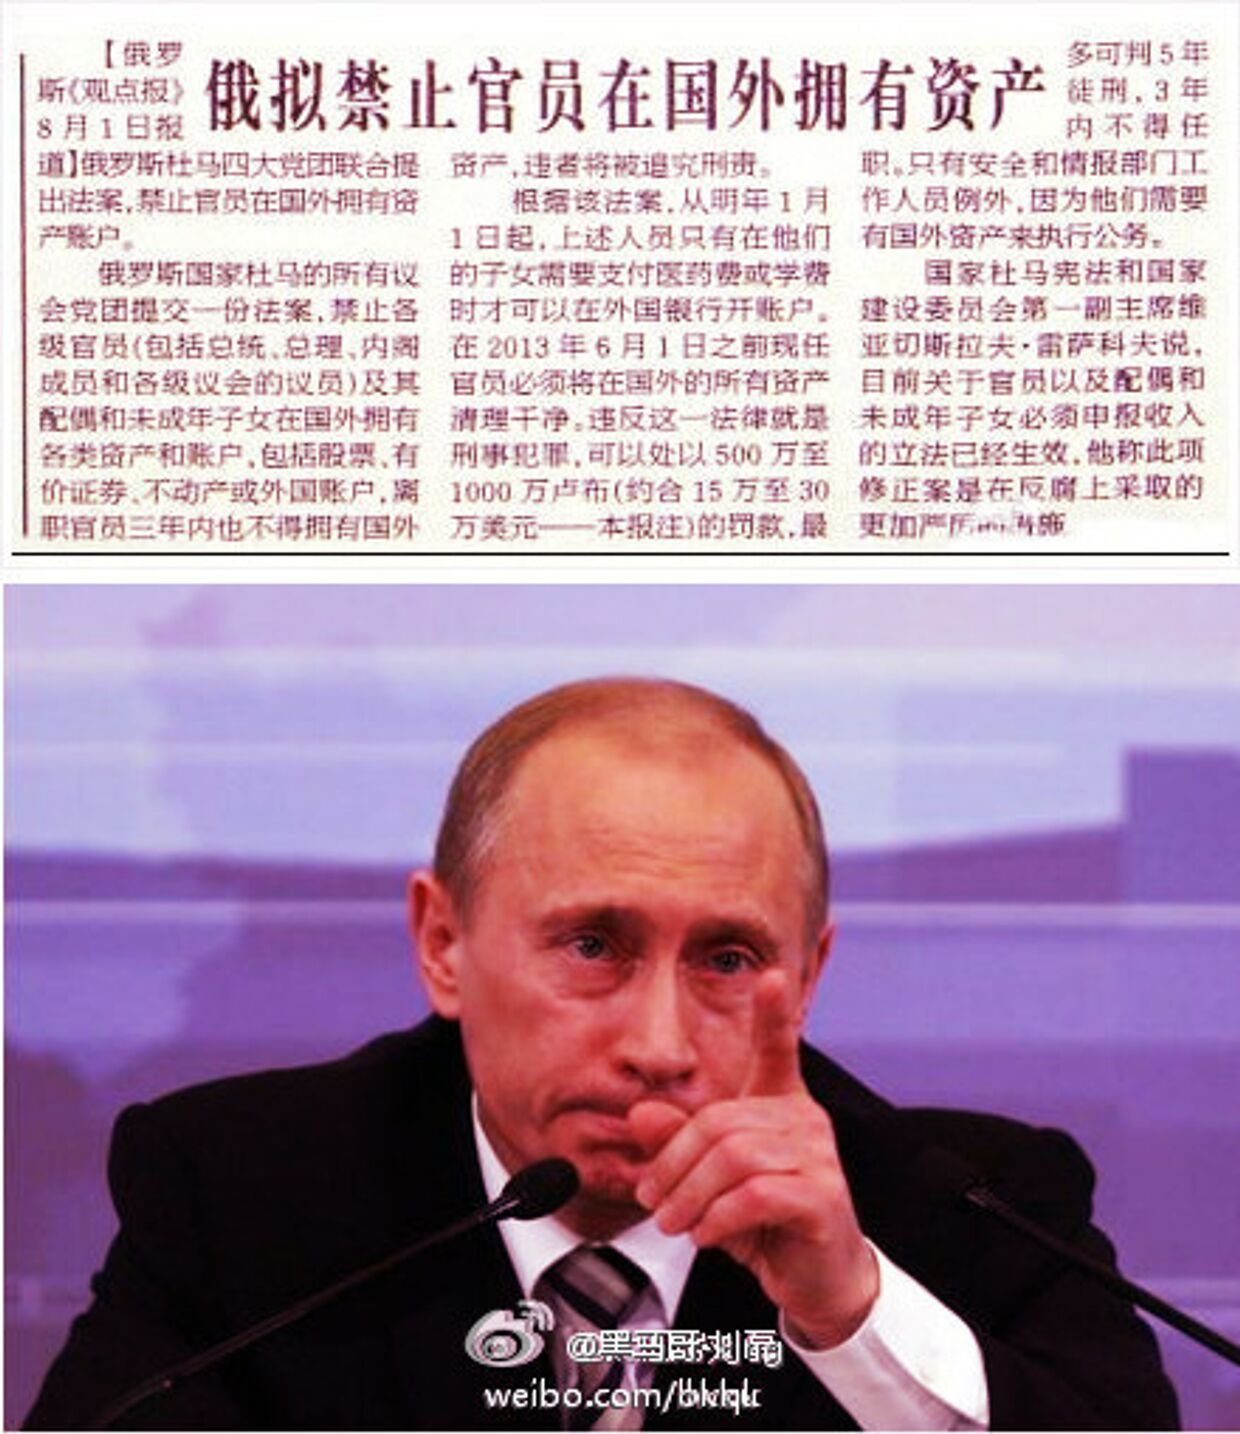 Картинка из Sina Weibo: Путин